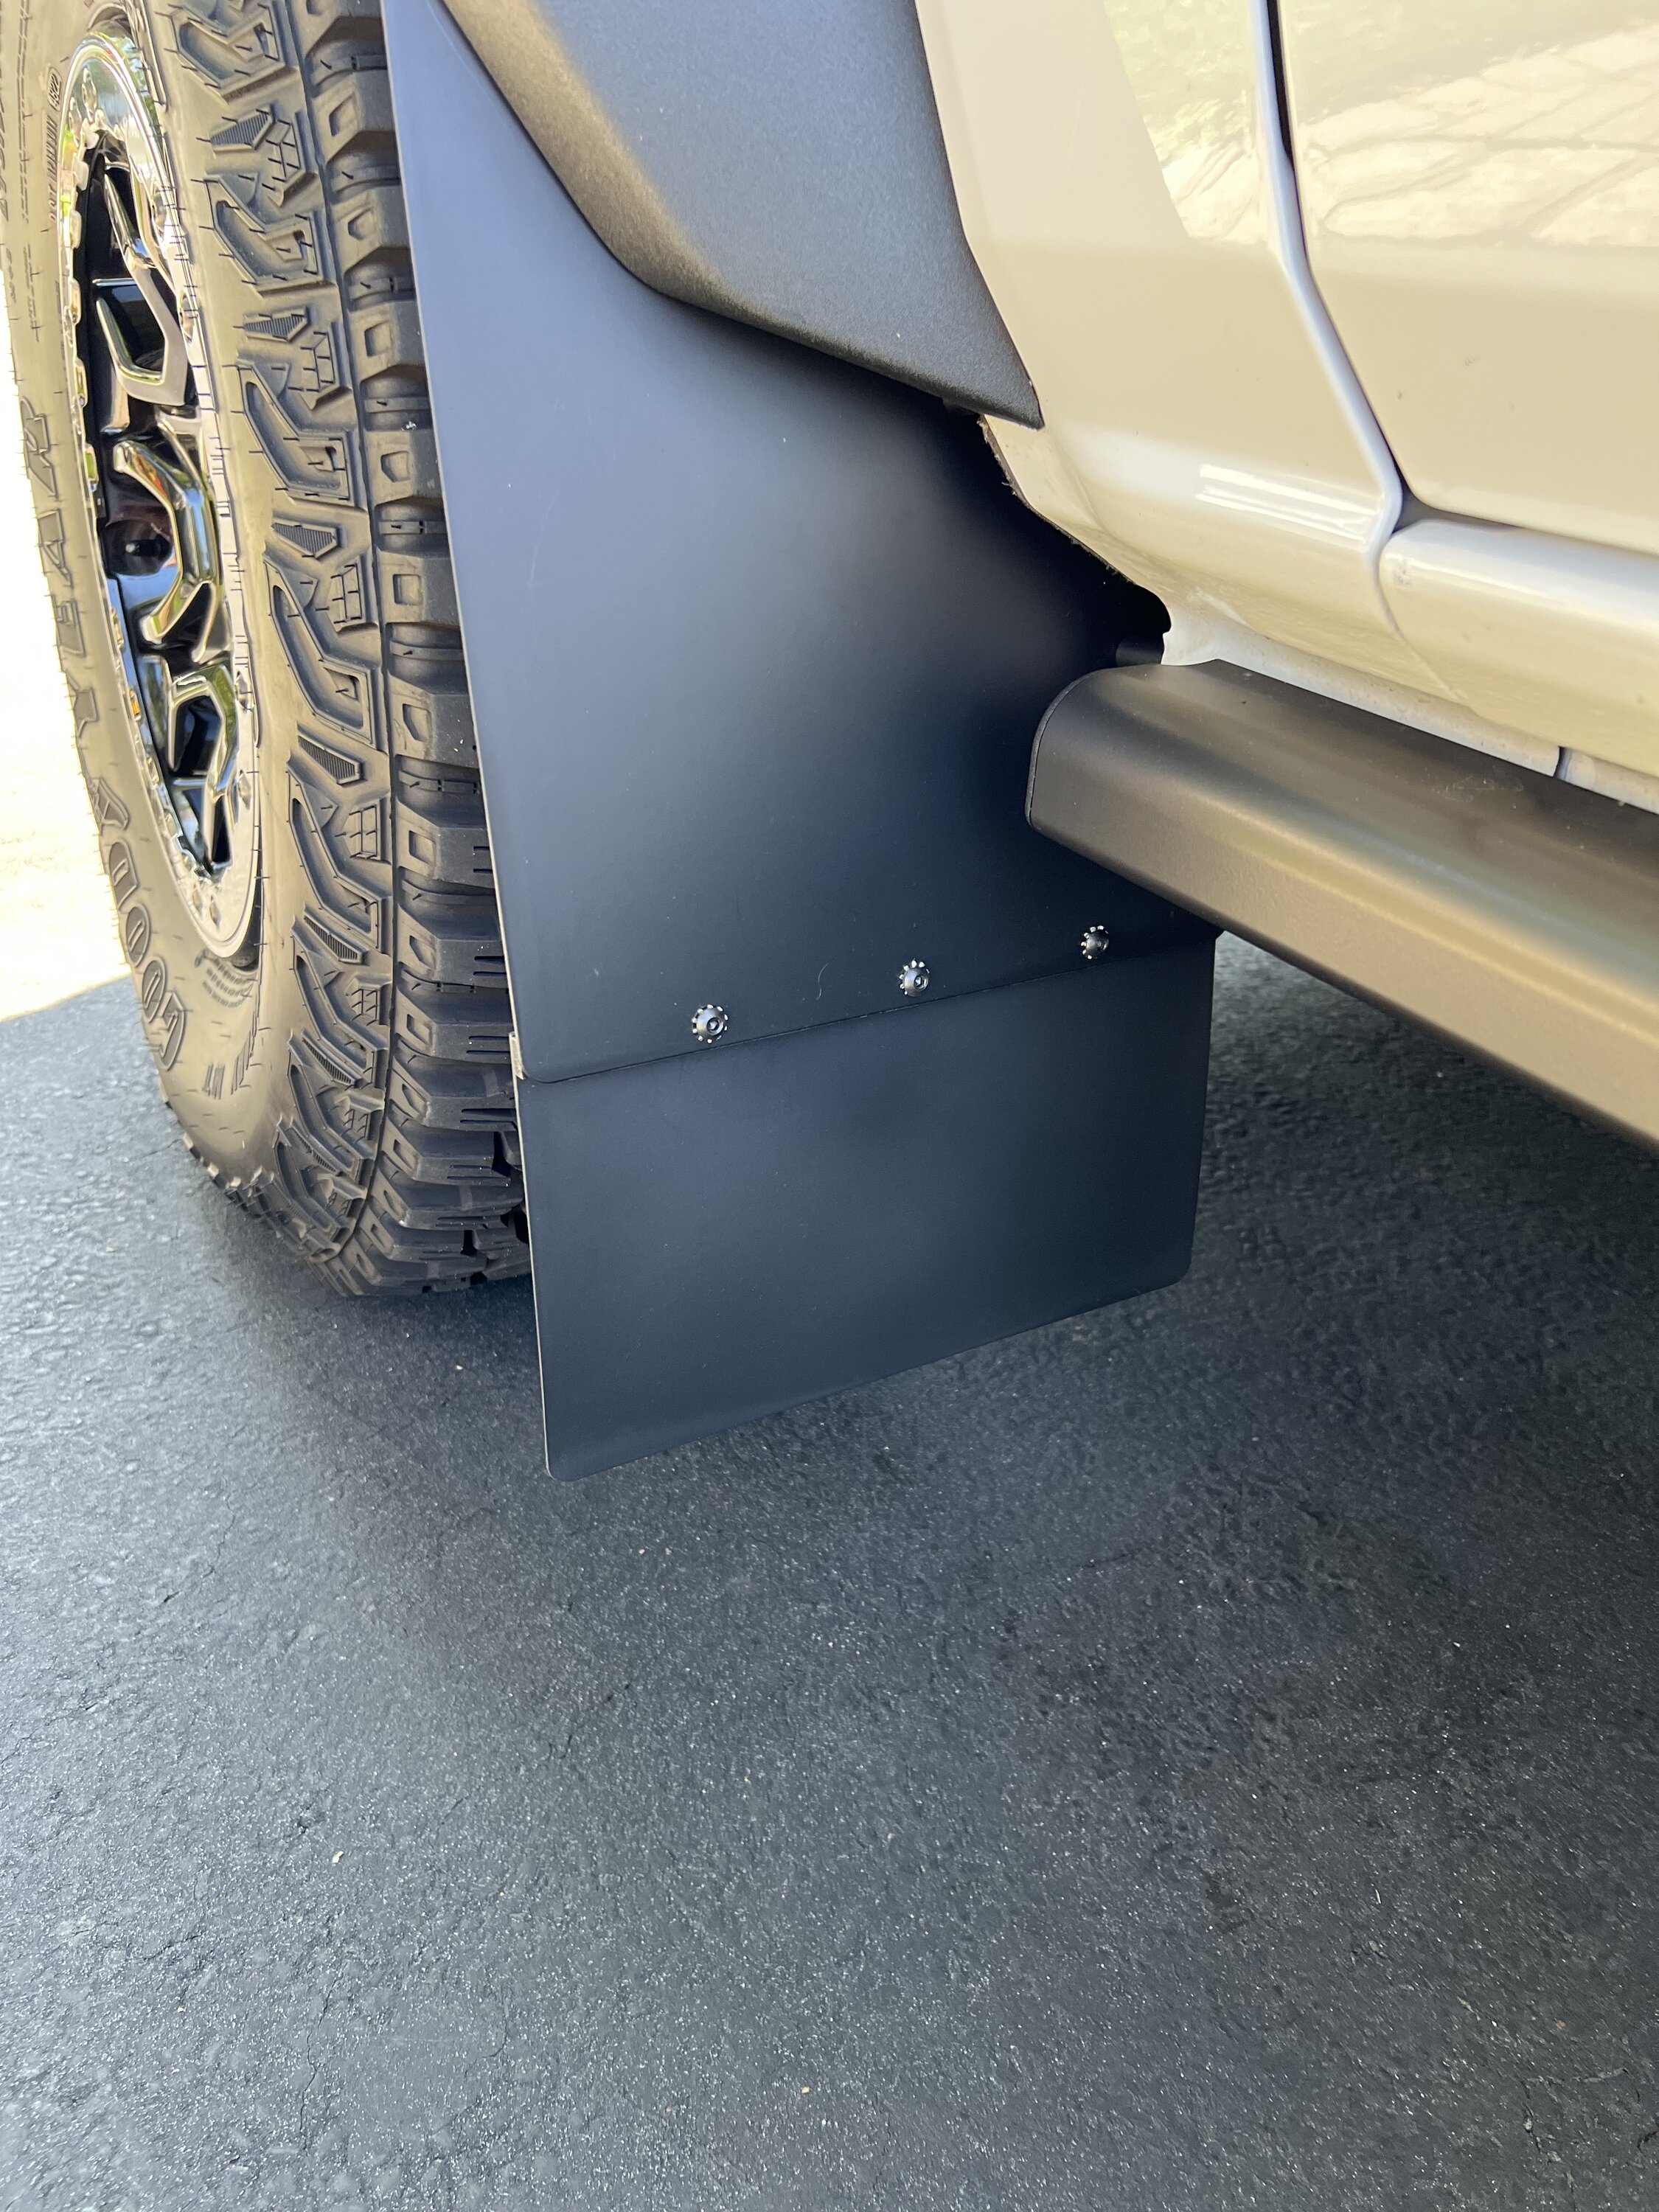 Ford Bronco Mud flaps options? IMG_1236